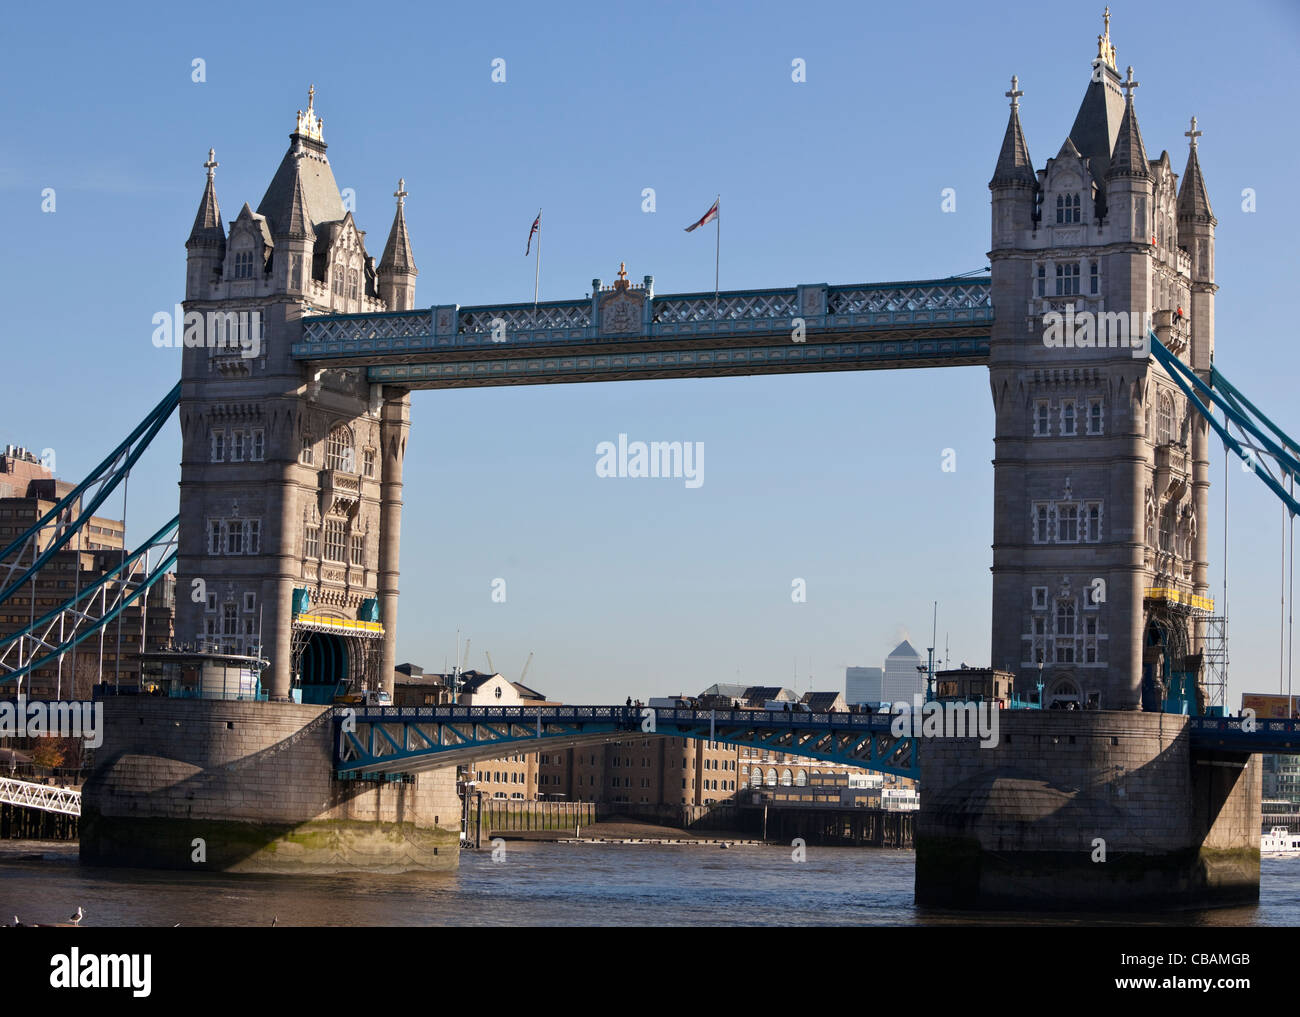 Tower Bridge River Thames London England UK GB British Stock Photo